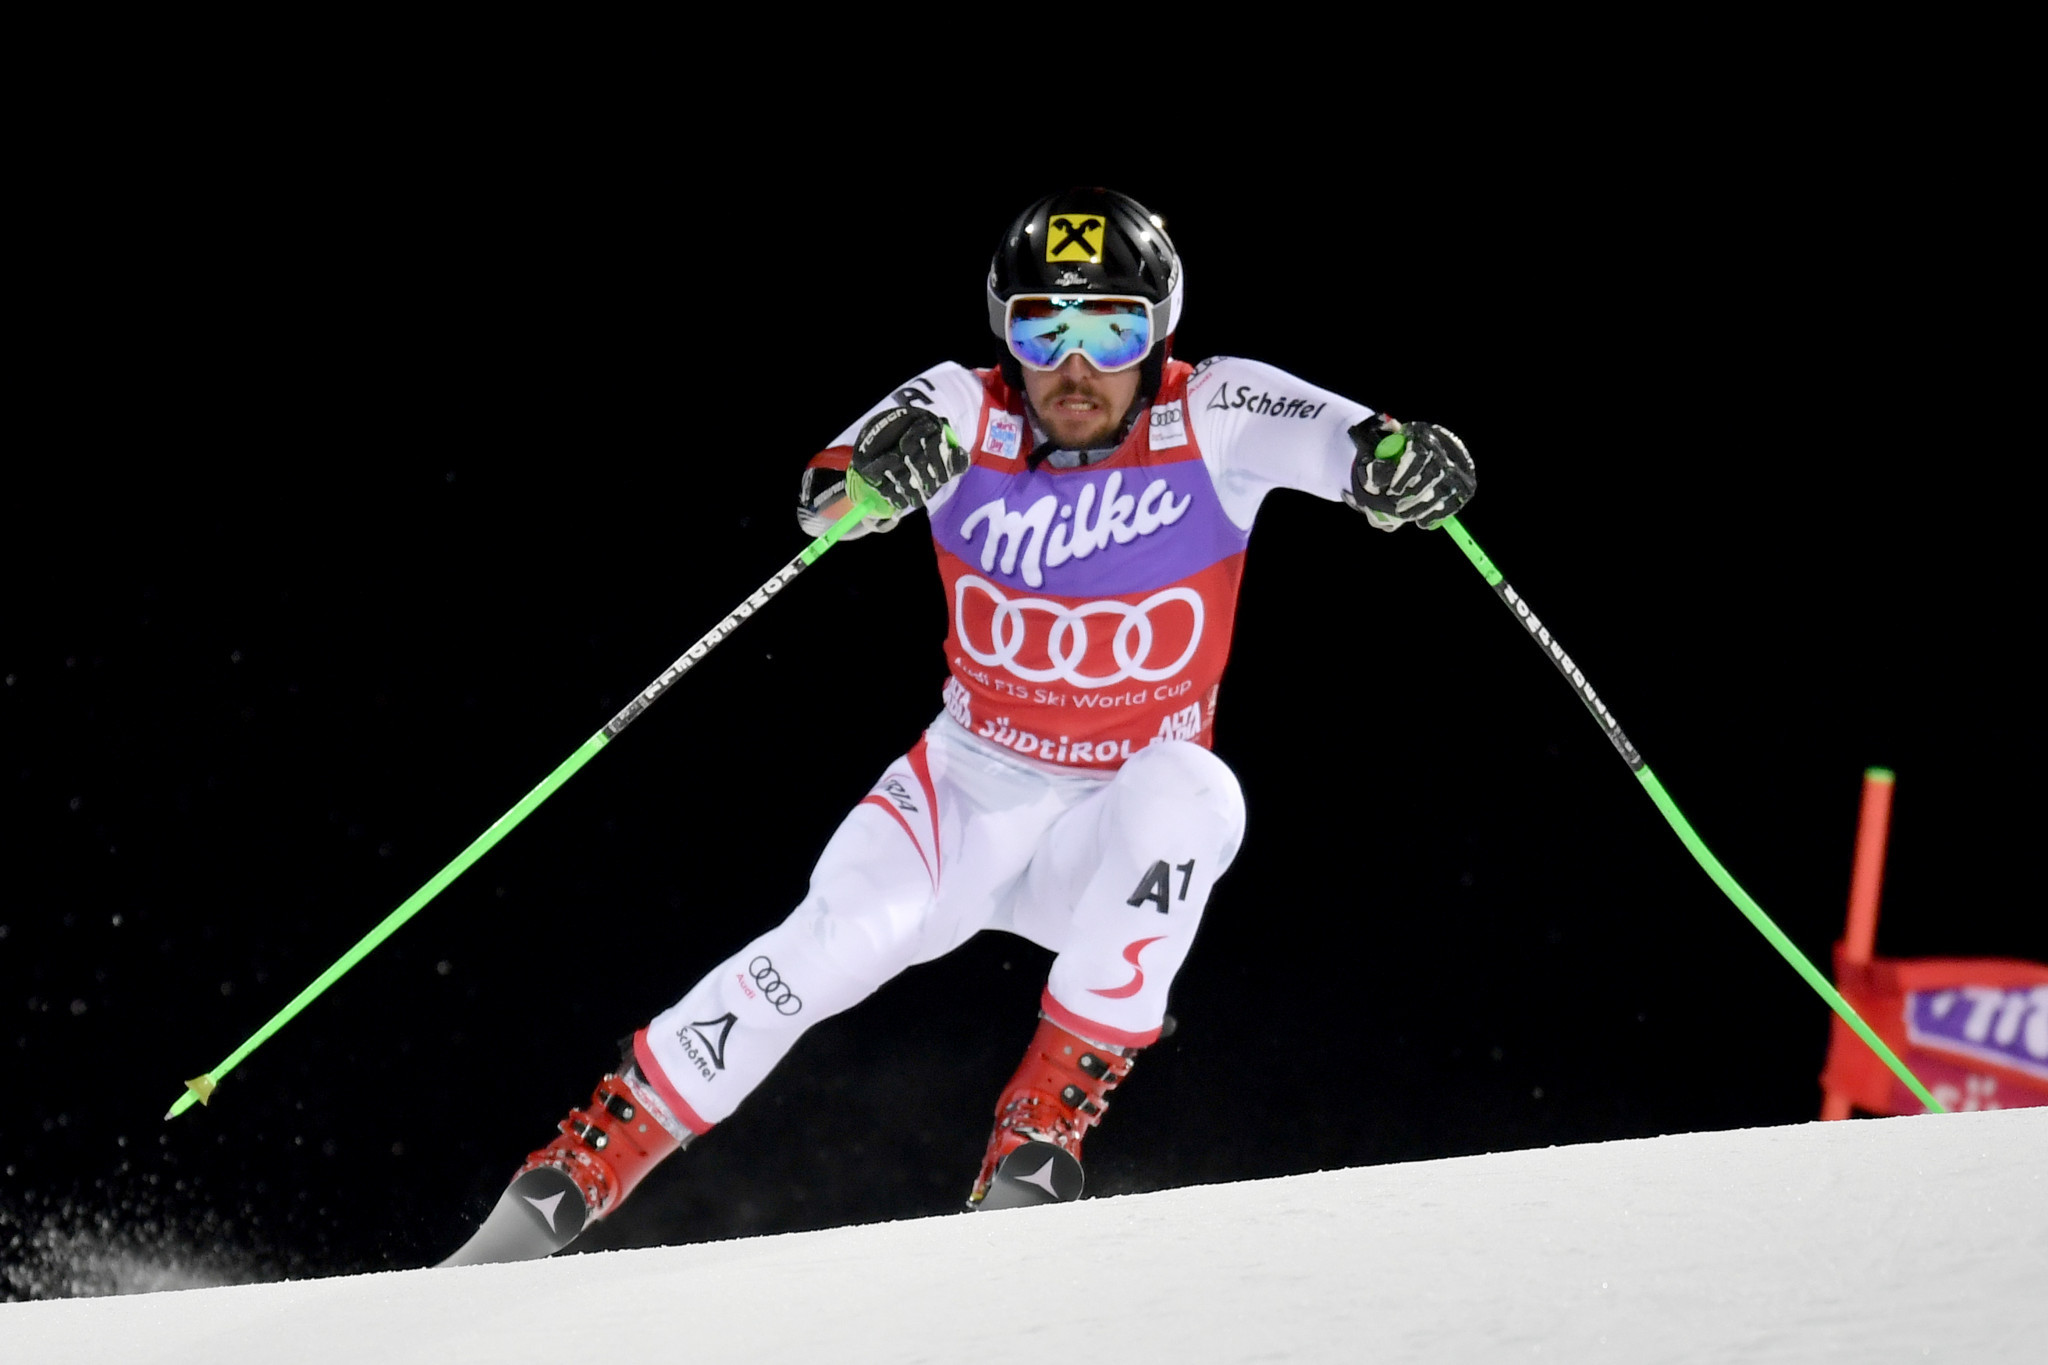 Hirscher seeking to continue slalom World Cup dominance at Madonna di Campiglio